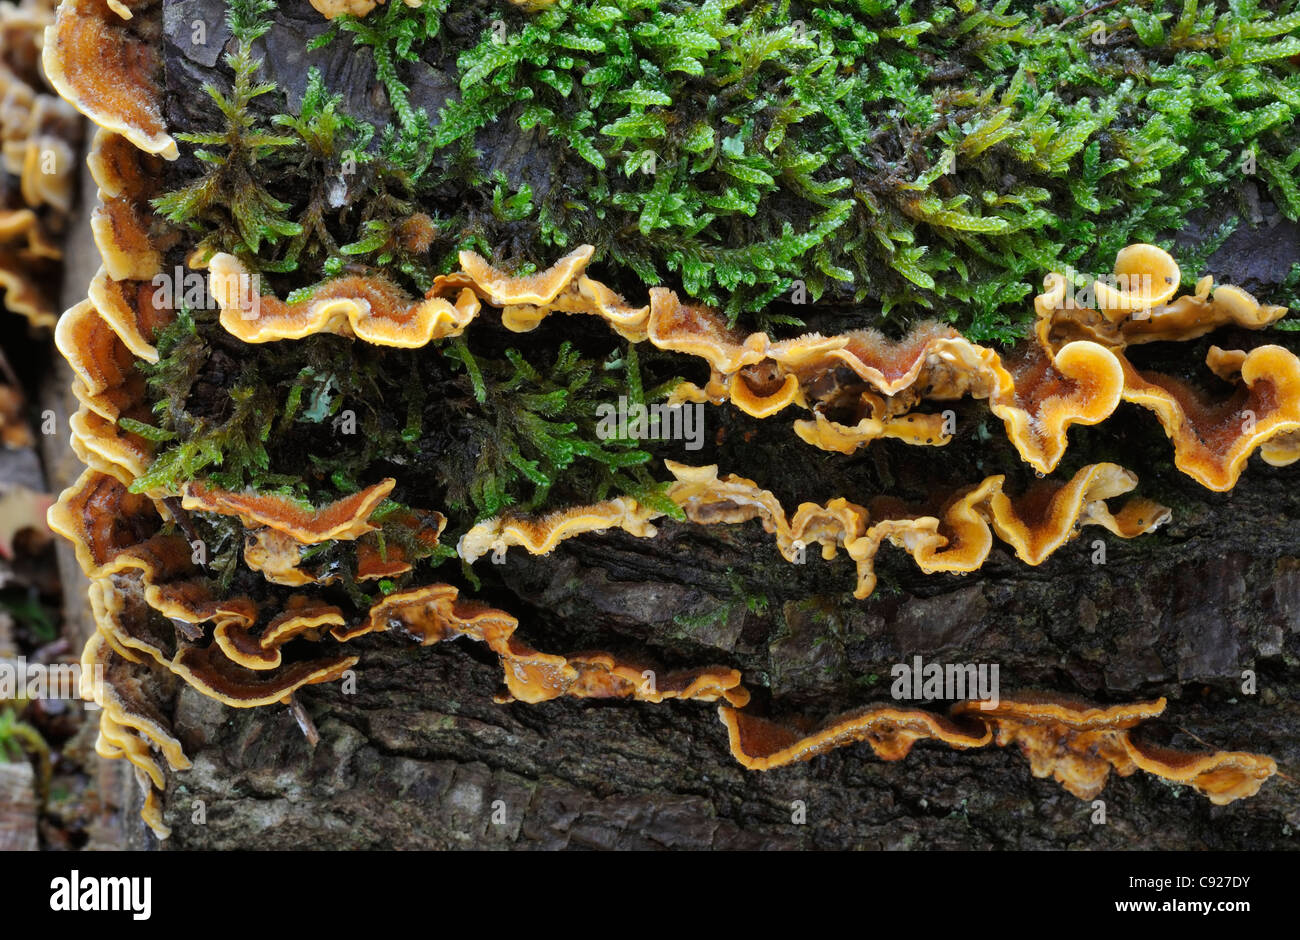 Hairy Stereum Bracket Fungi on log pile - Stereum hirsutum Stock Photo